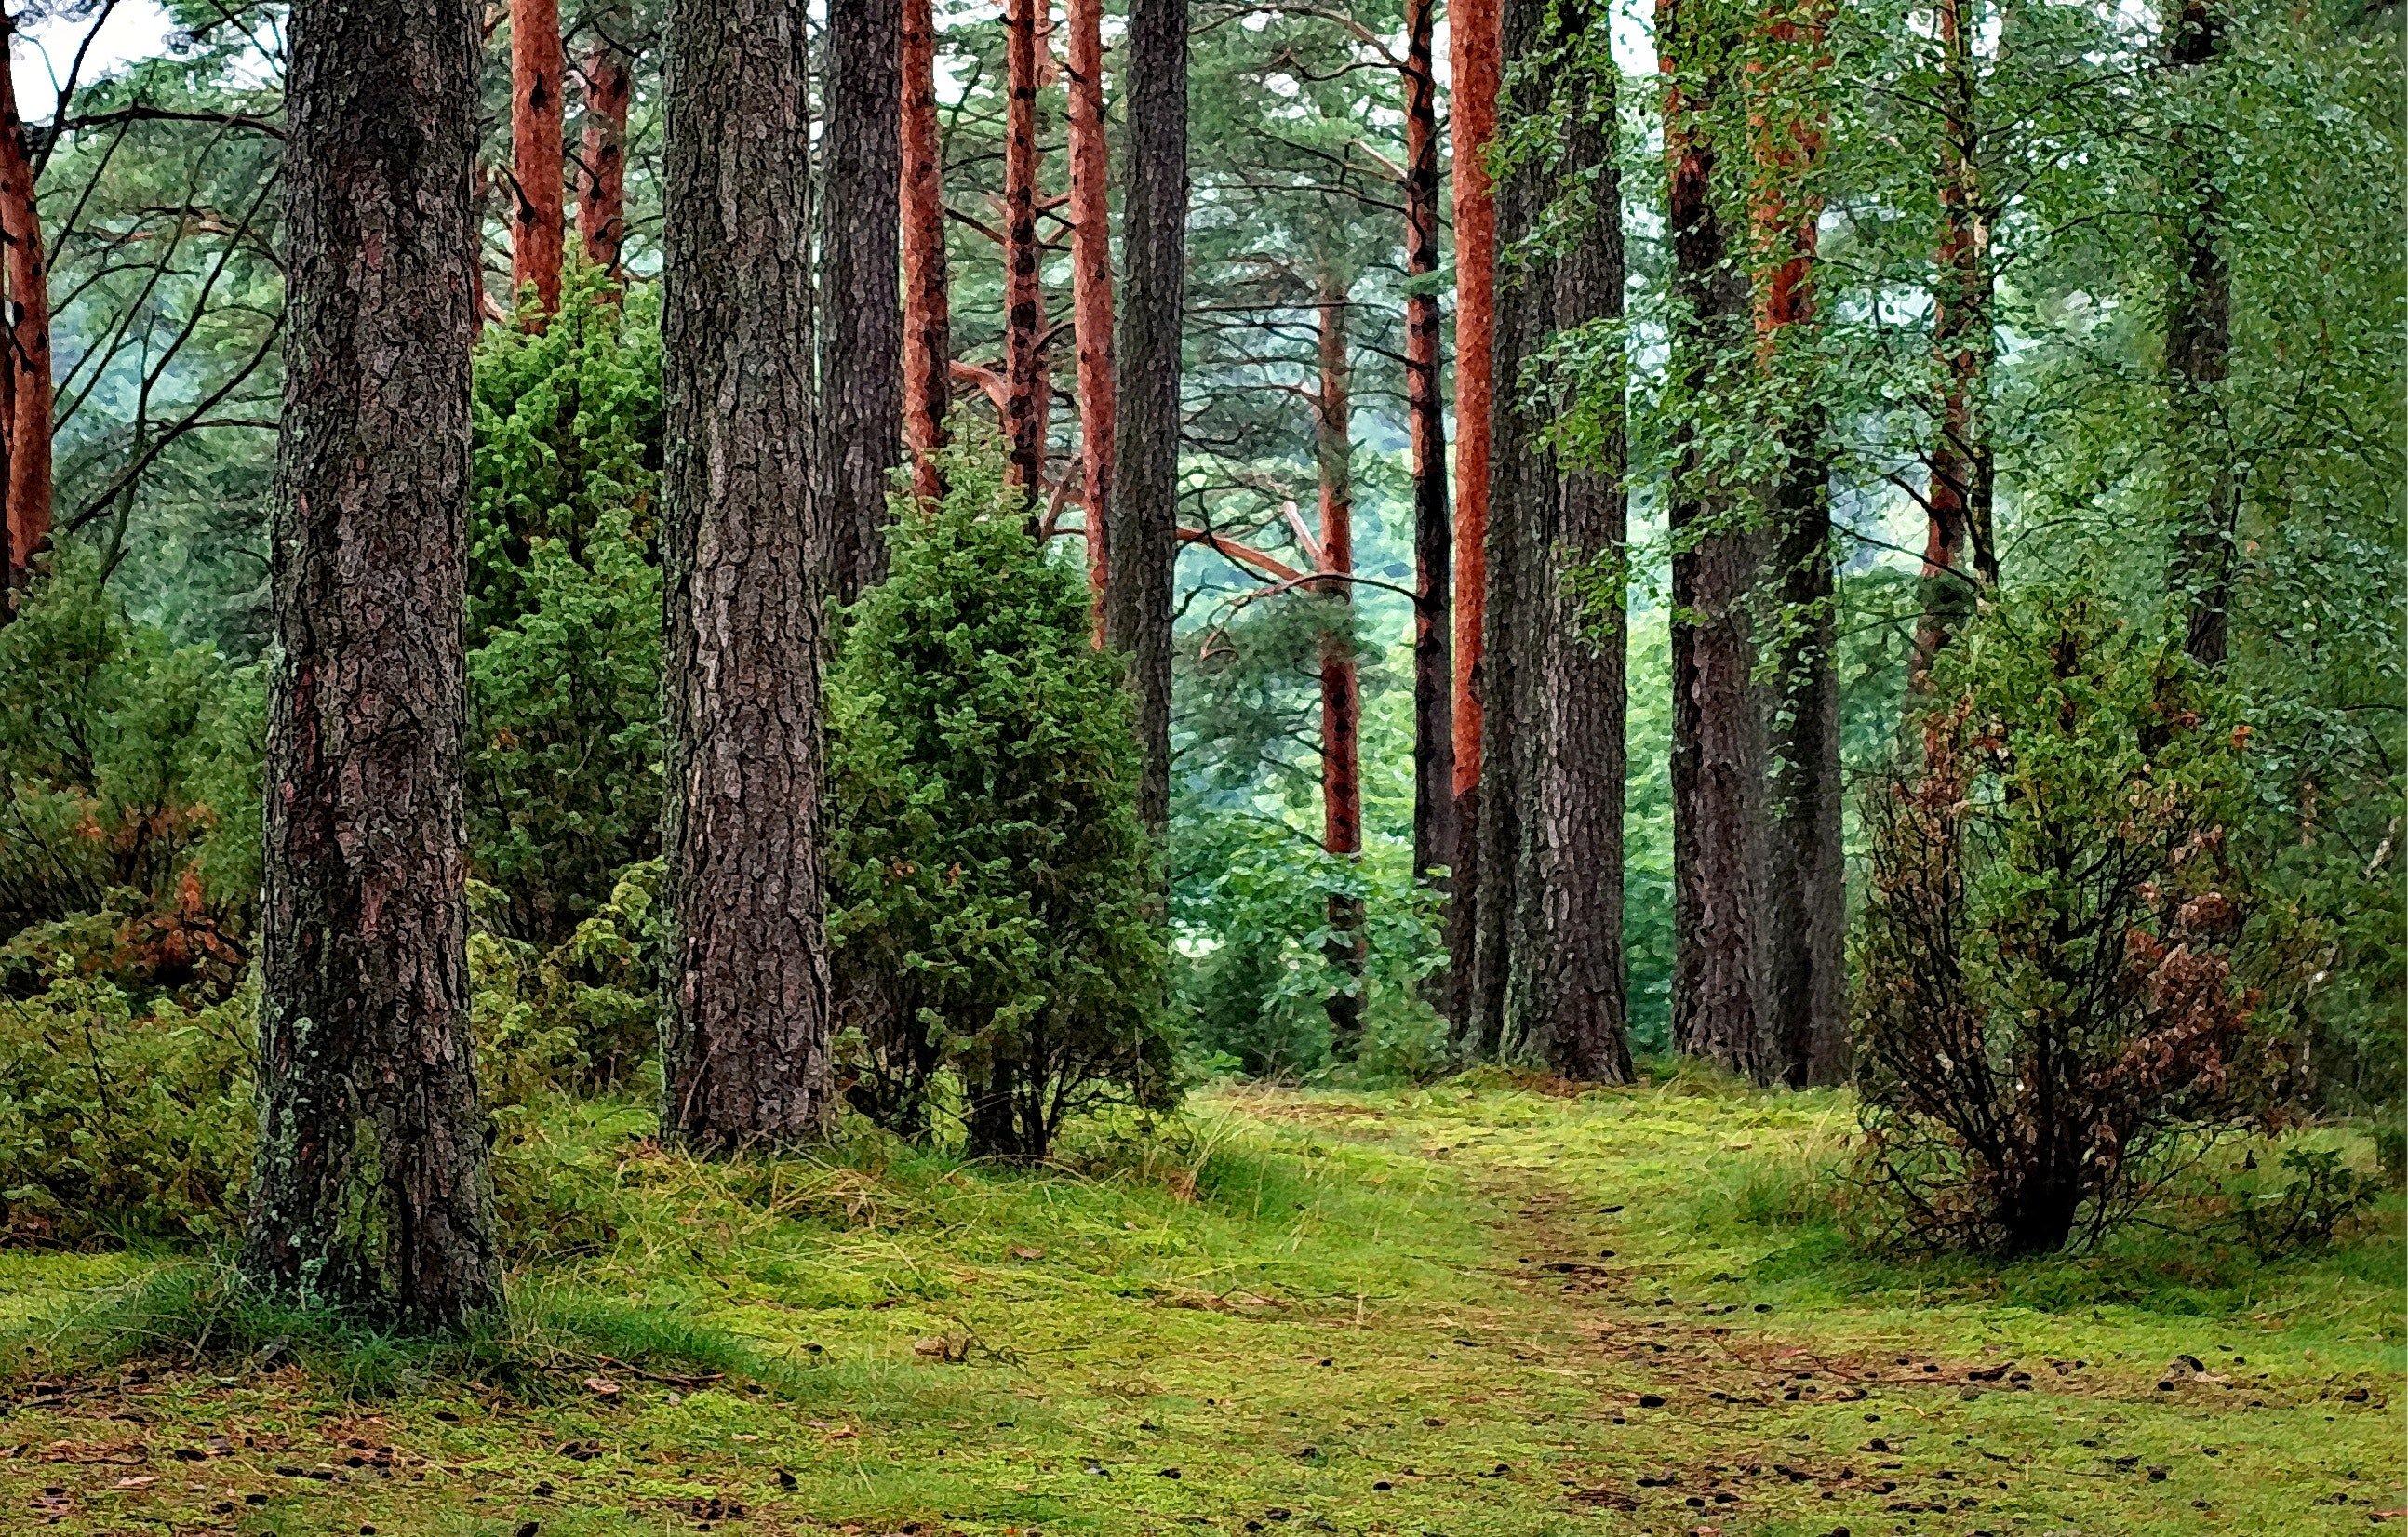 Lush forest. | Source: Pexels/Pixabay